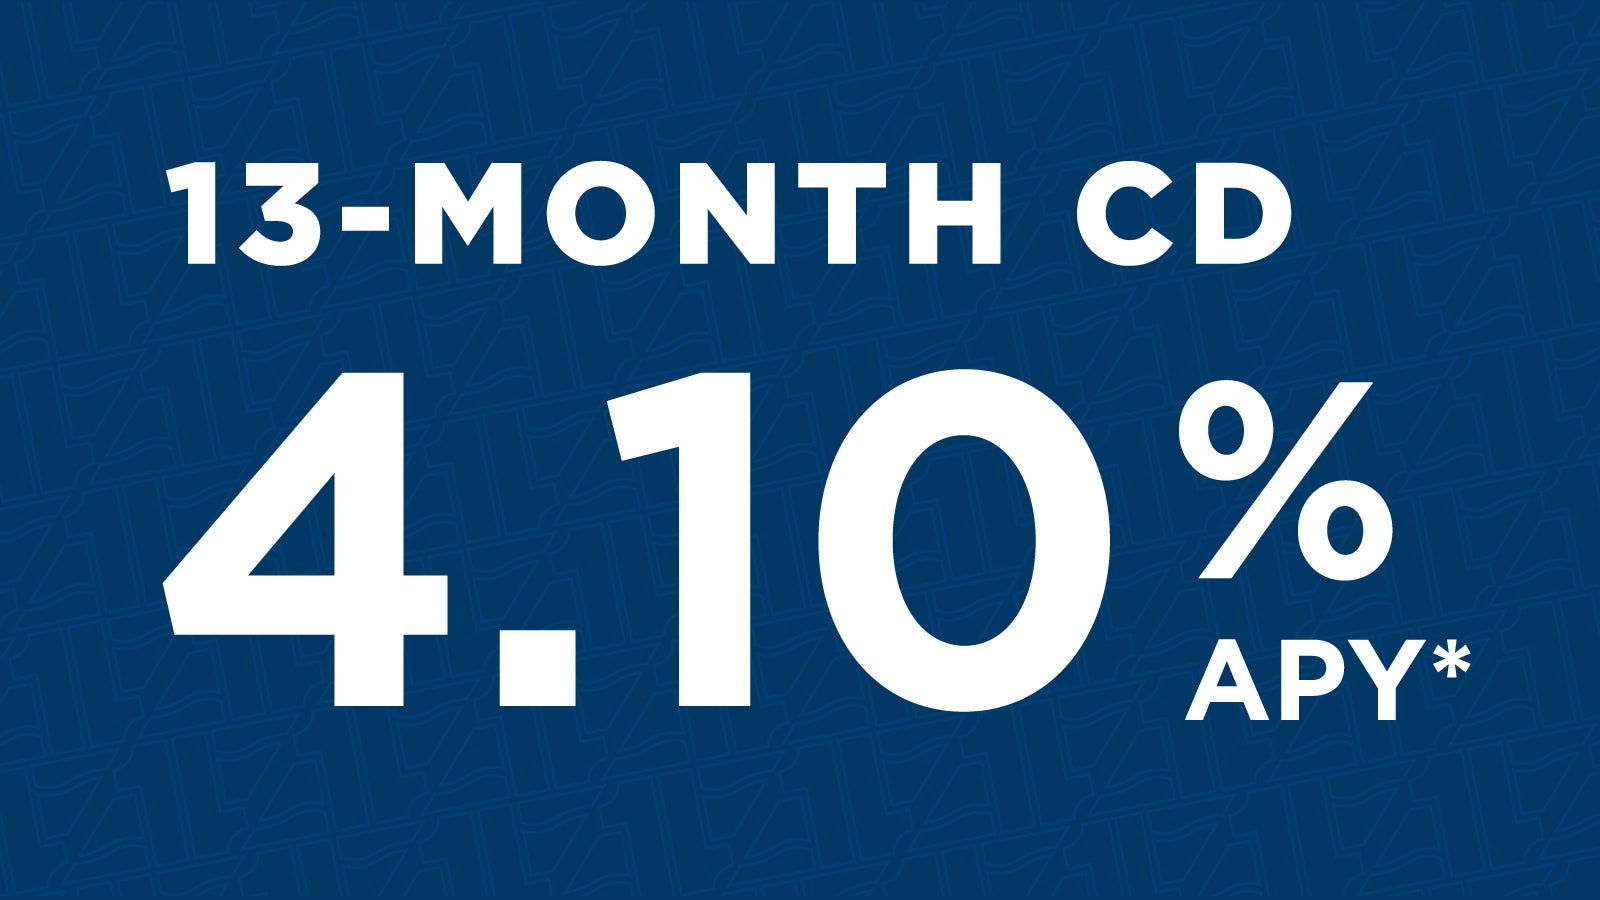 13-Month CD (Certificate of Deposit) 4.10% APY